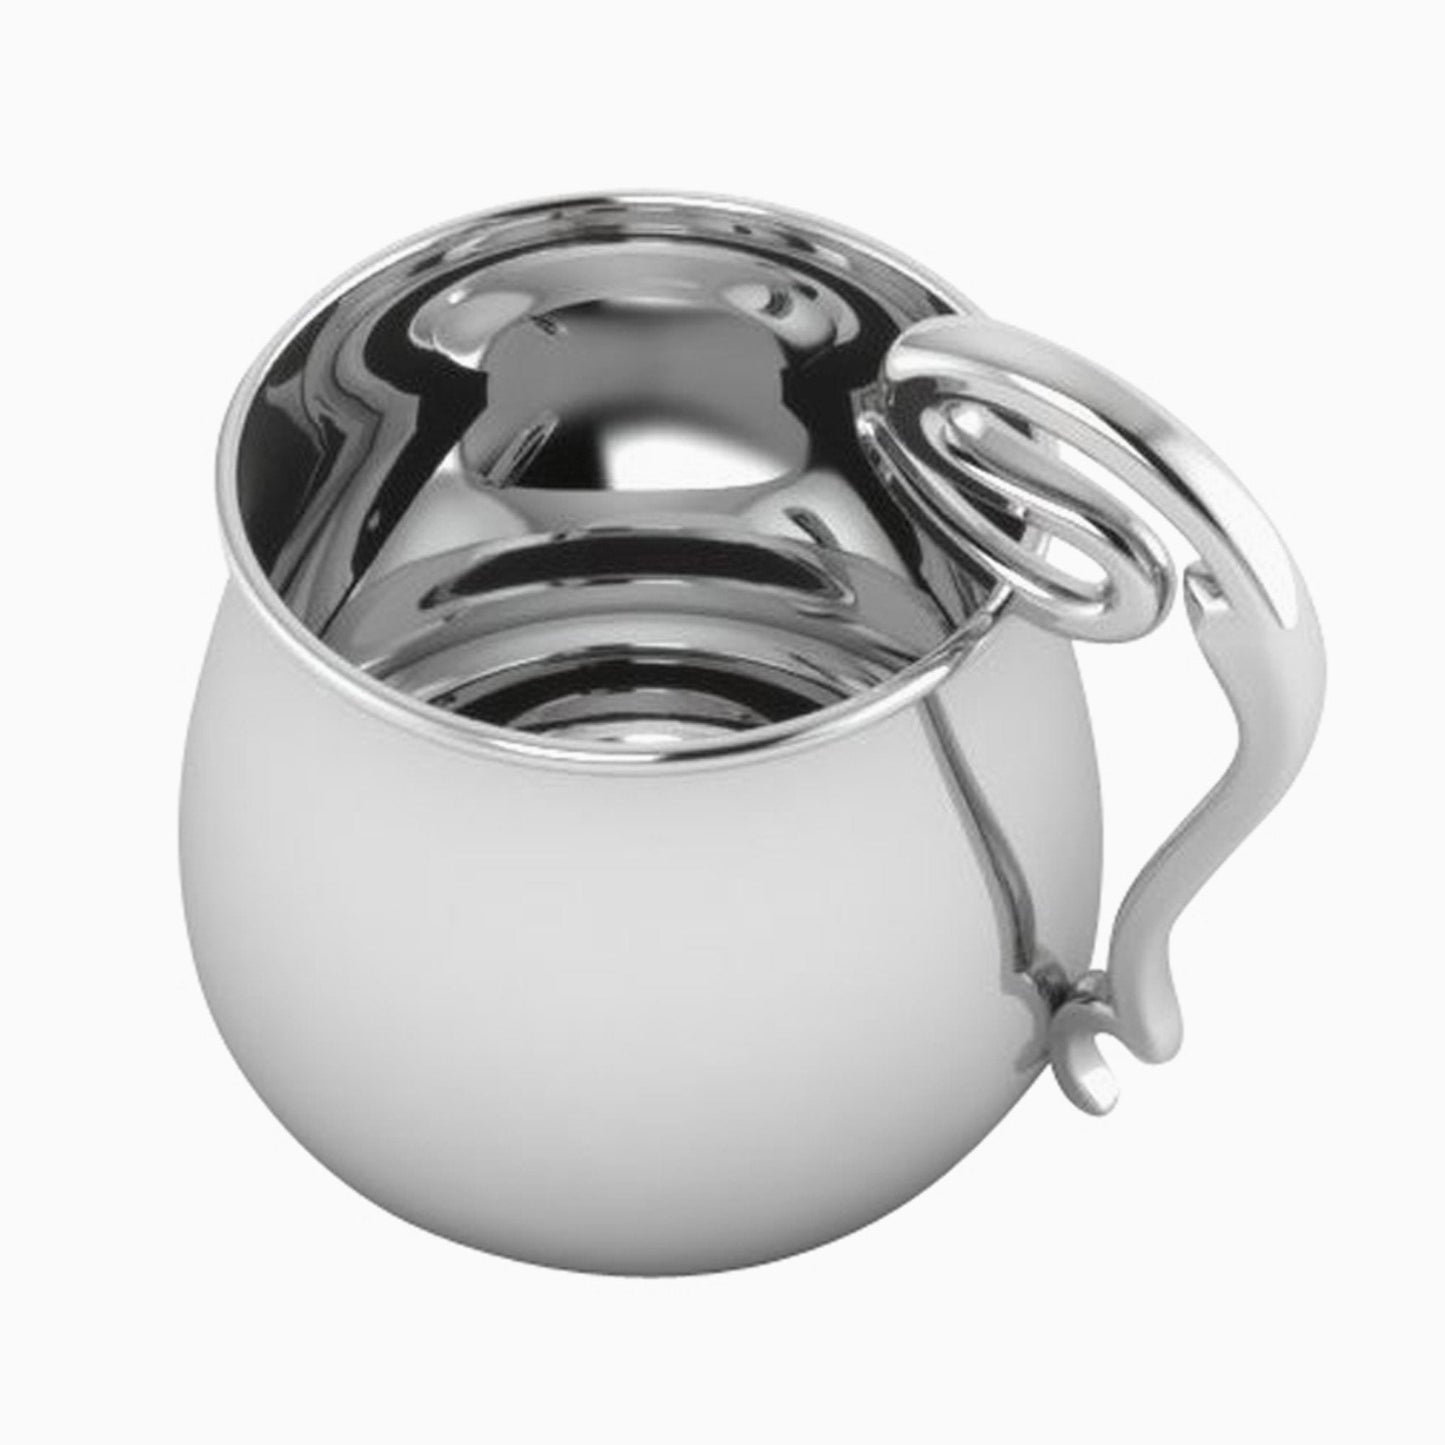 Curve Sterling Silver Baby Cup by Krysaliis